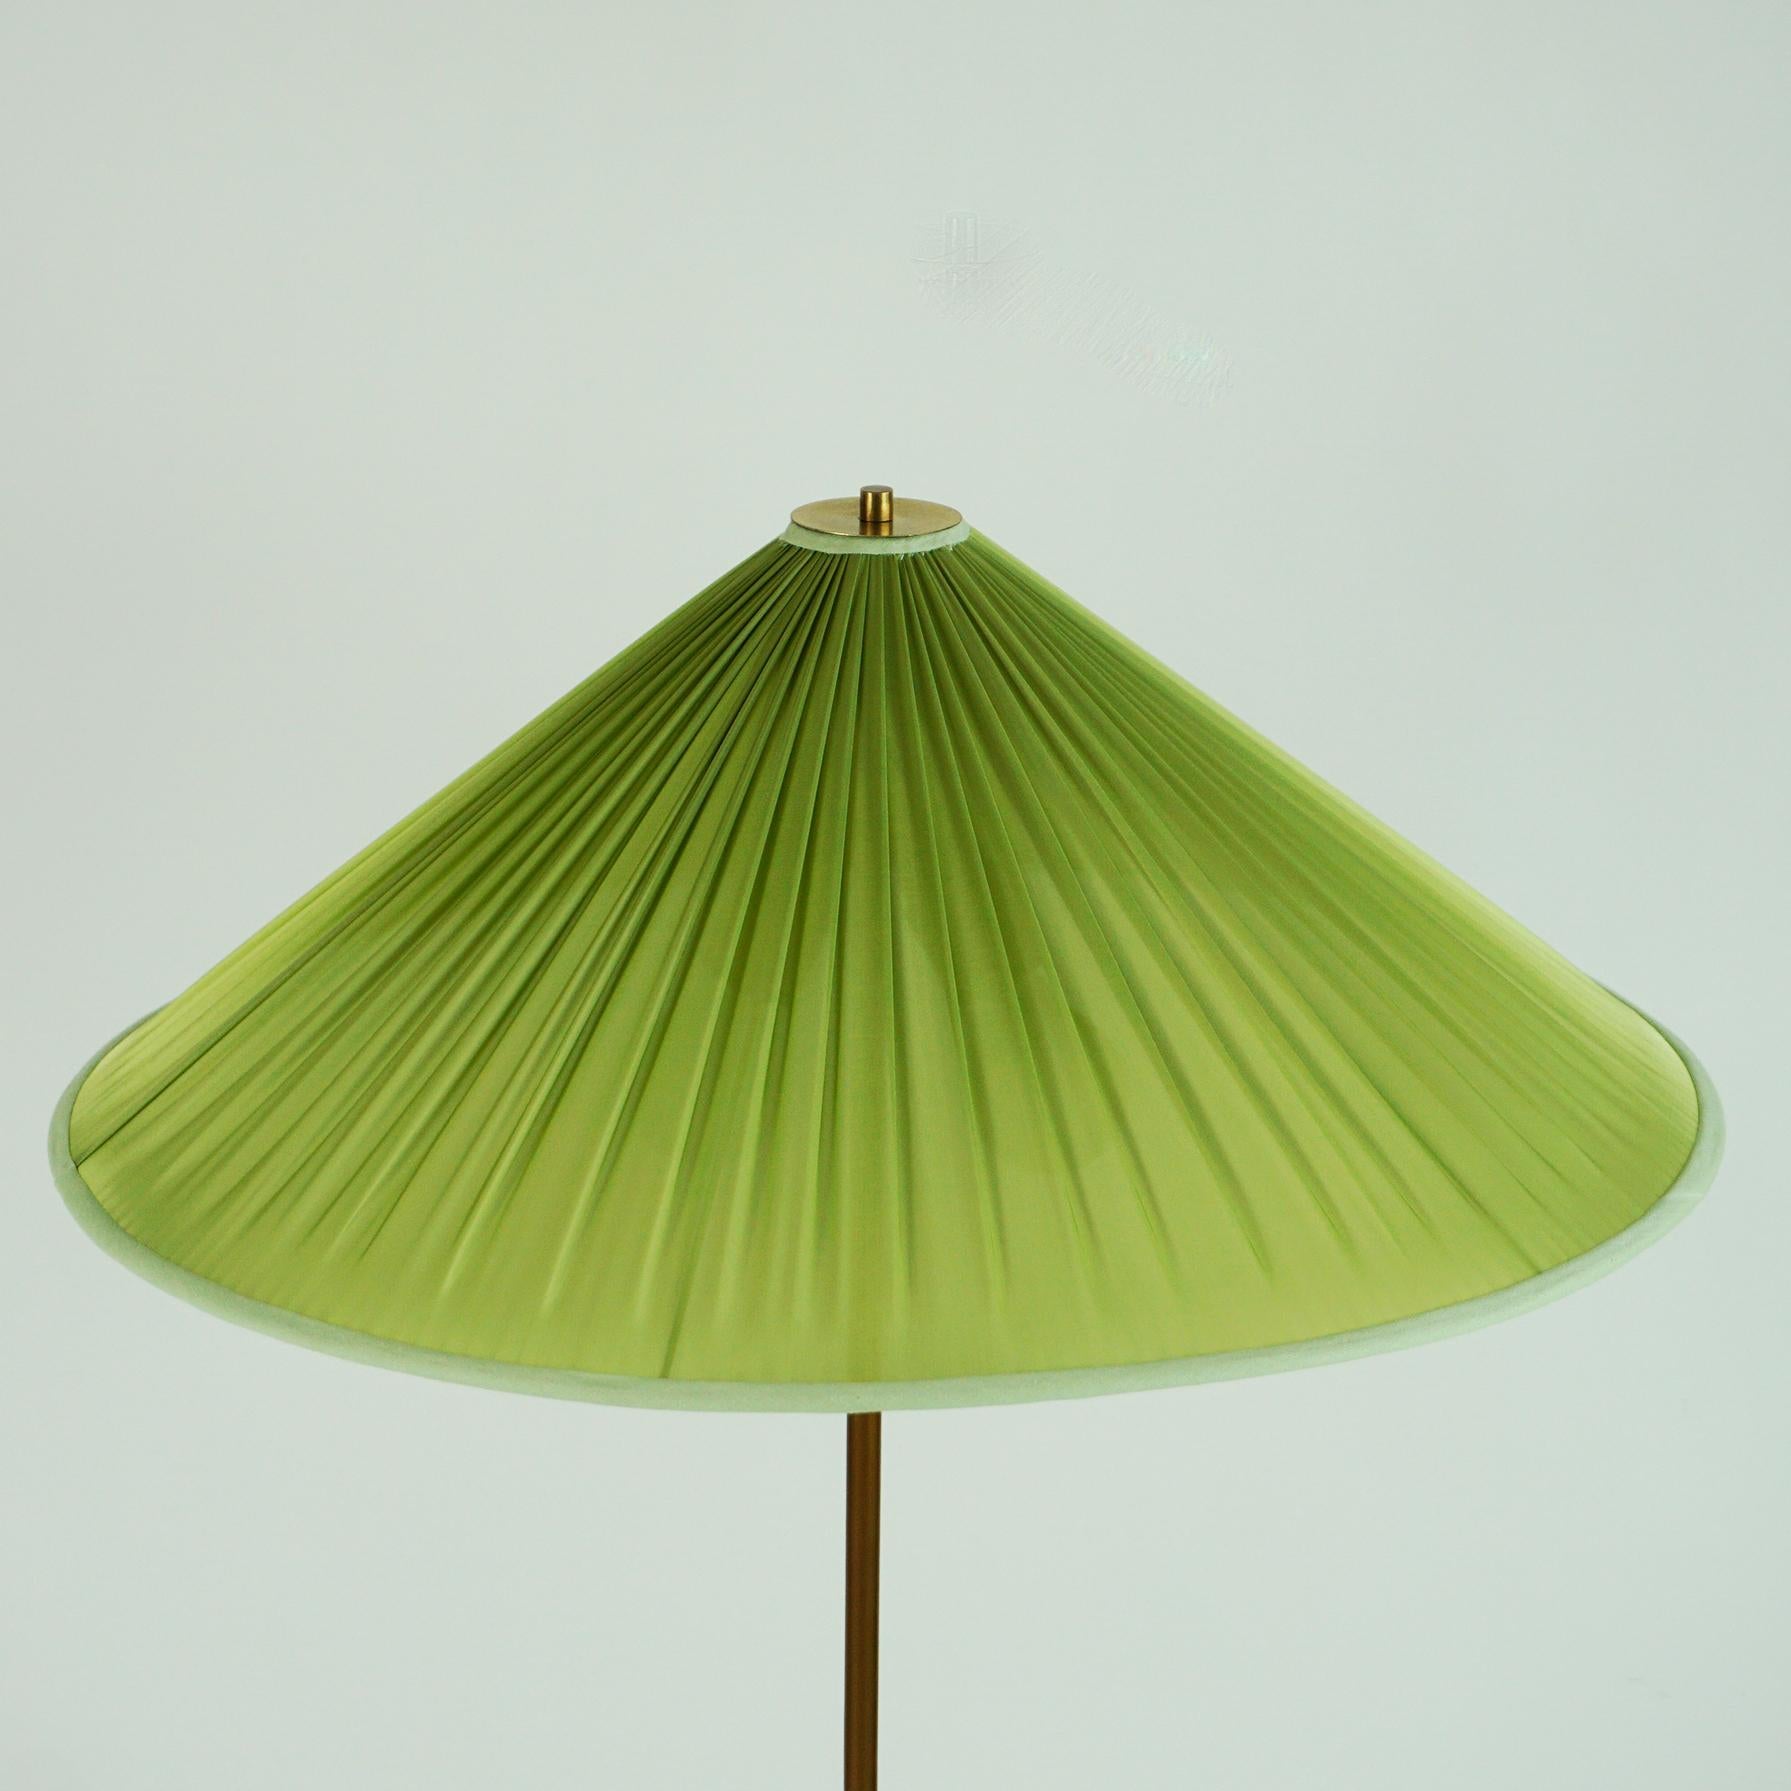 Austrian Midcentury Brass Floor Lamp with Green Shade Attr. to Rupert Nikoll 1